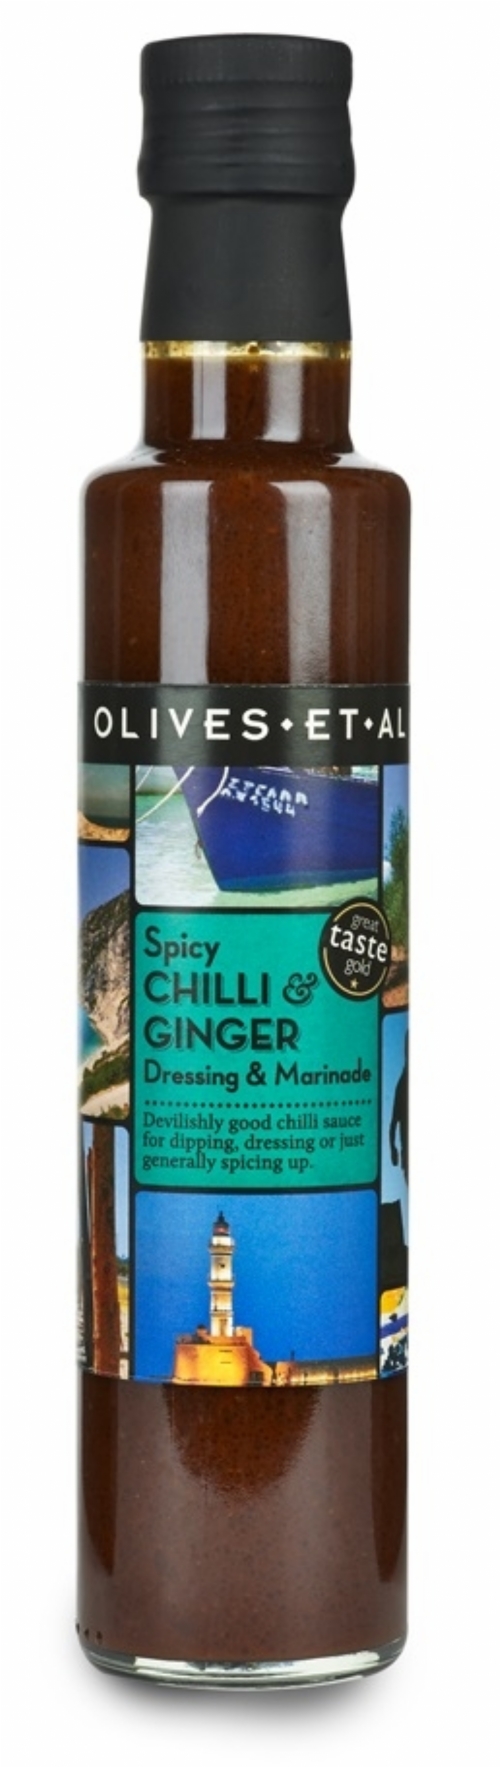 OLIVES ET AL Spicy Chilli & Ginger Dressing & Marinade 250ml